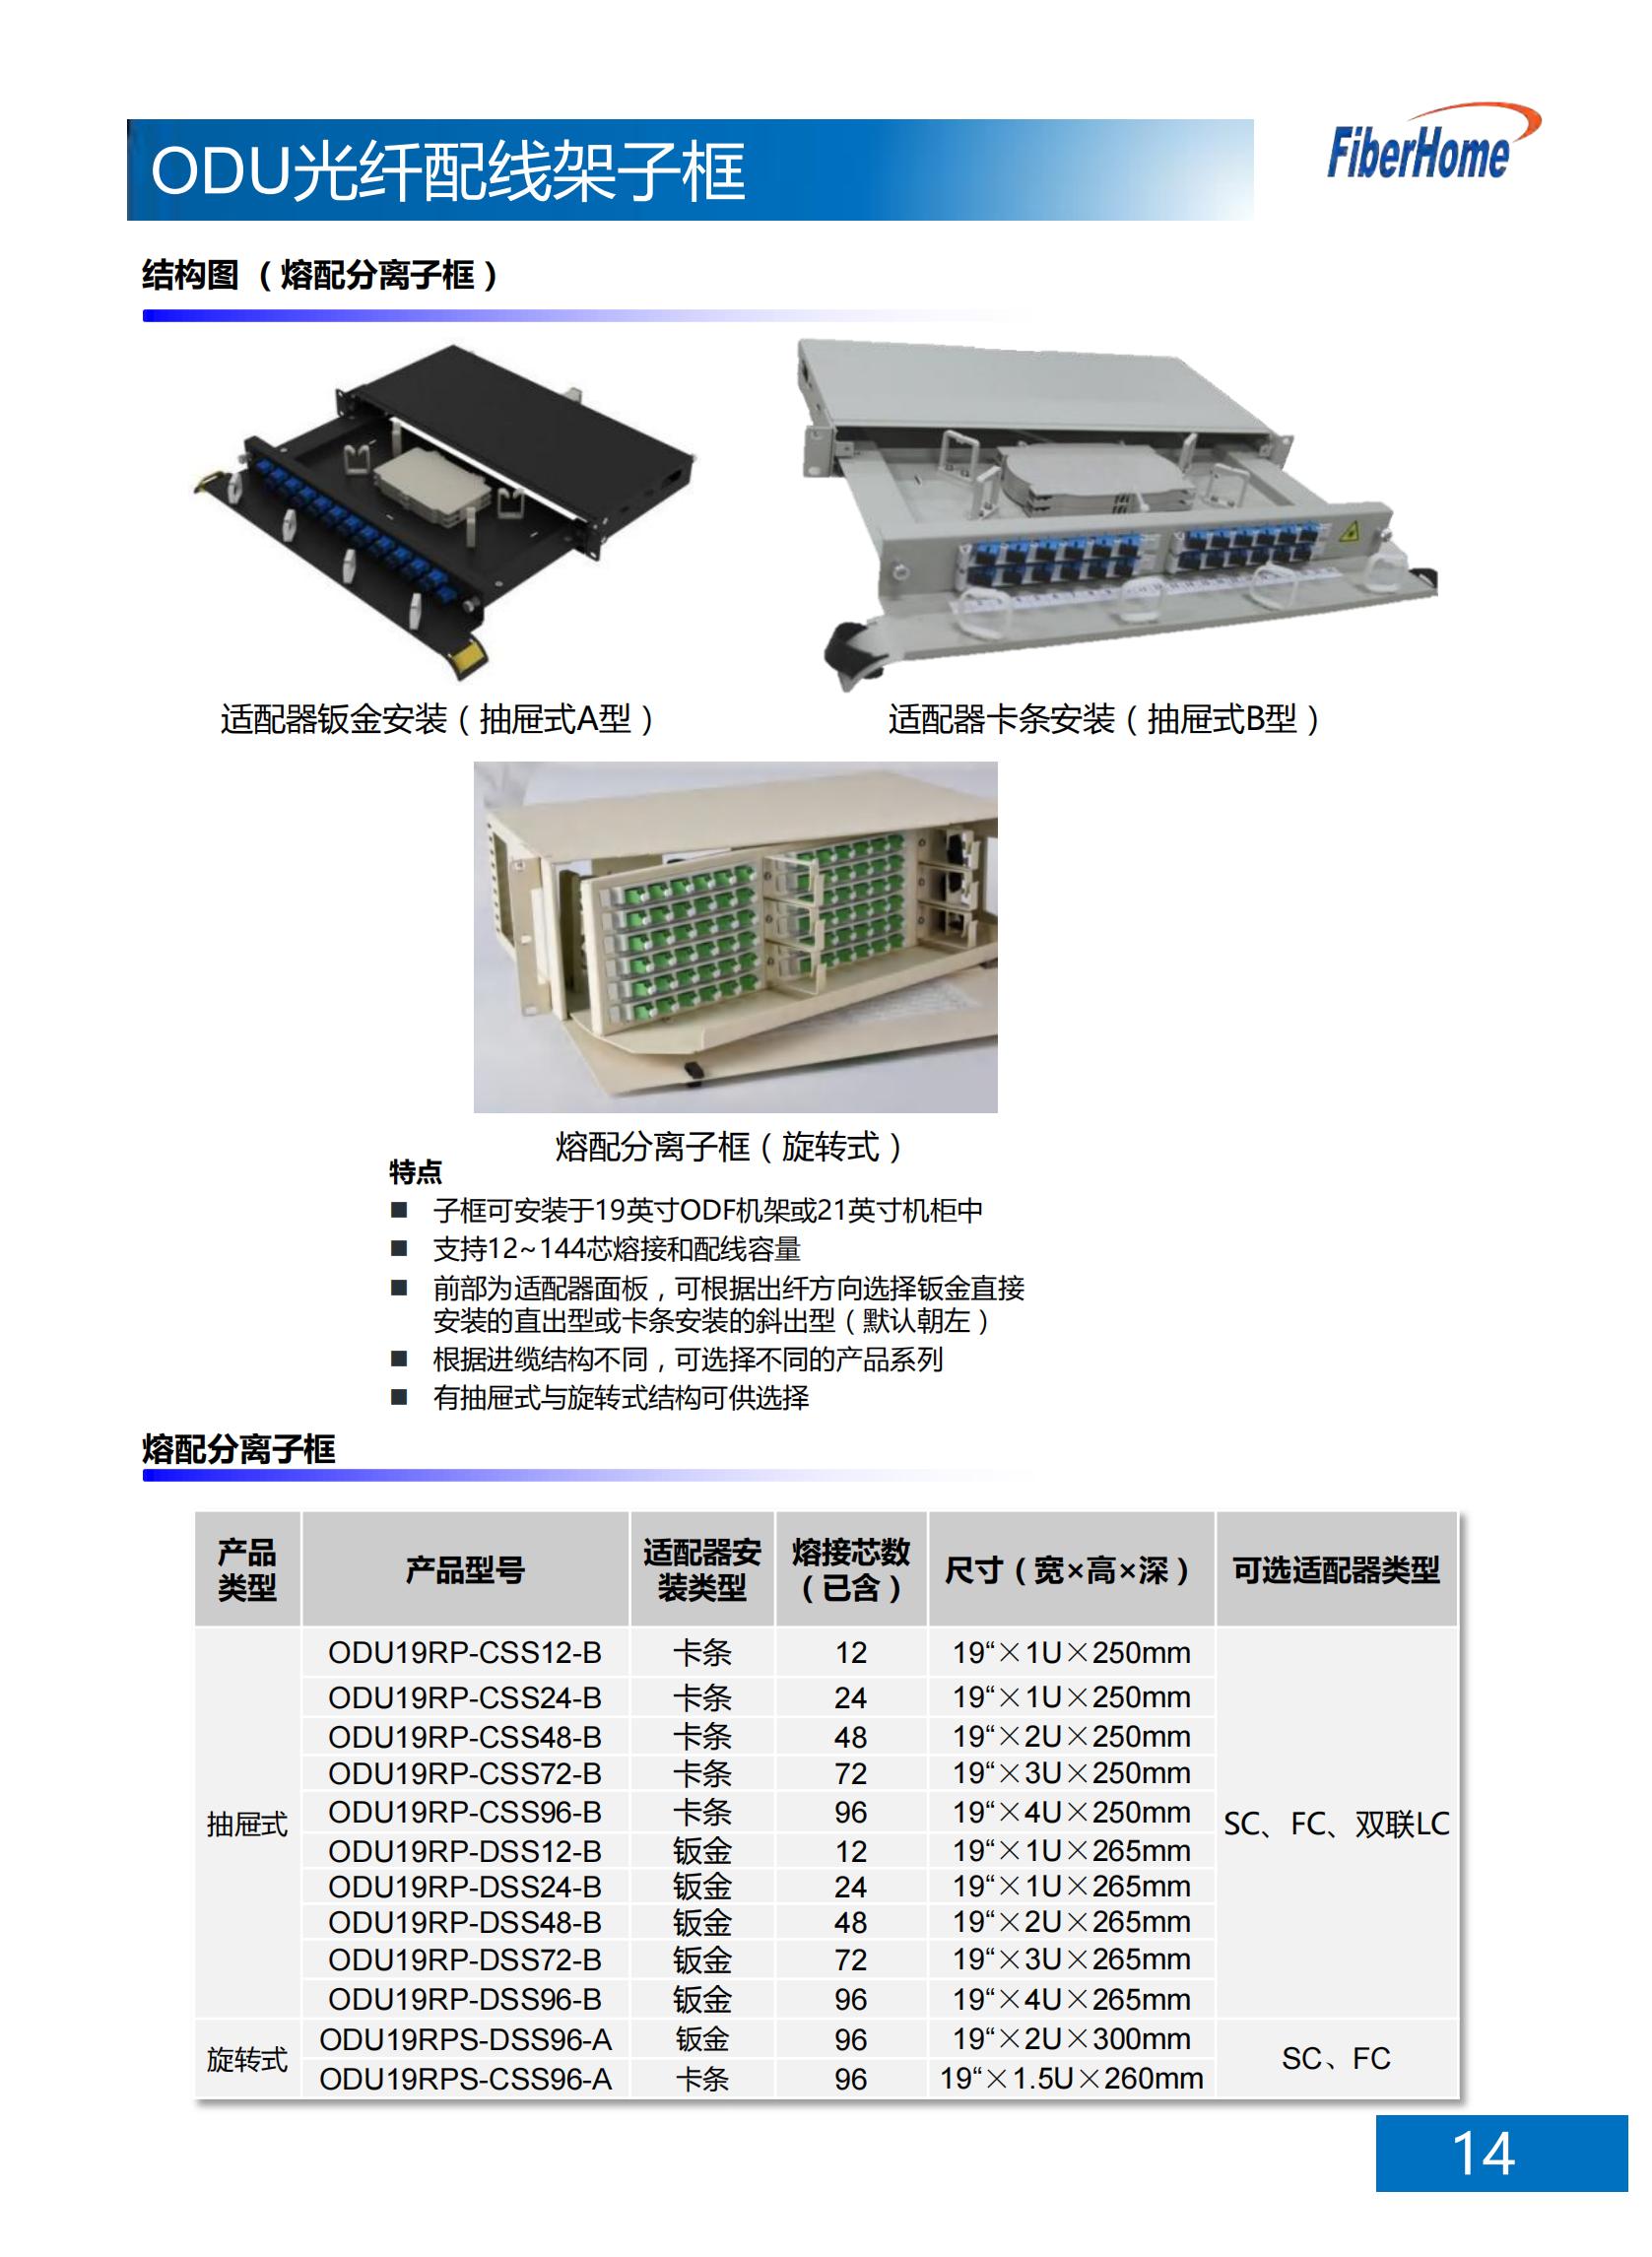 48-core ODU optical fiber distribution shelf frame ODU19T-A48-A-SC (including 12-core SC fusion integration unit*4)